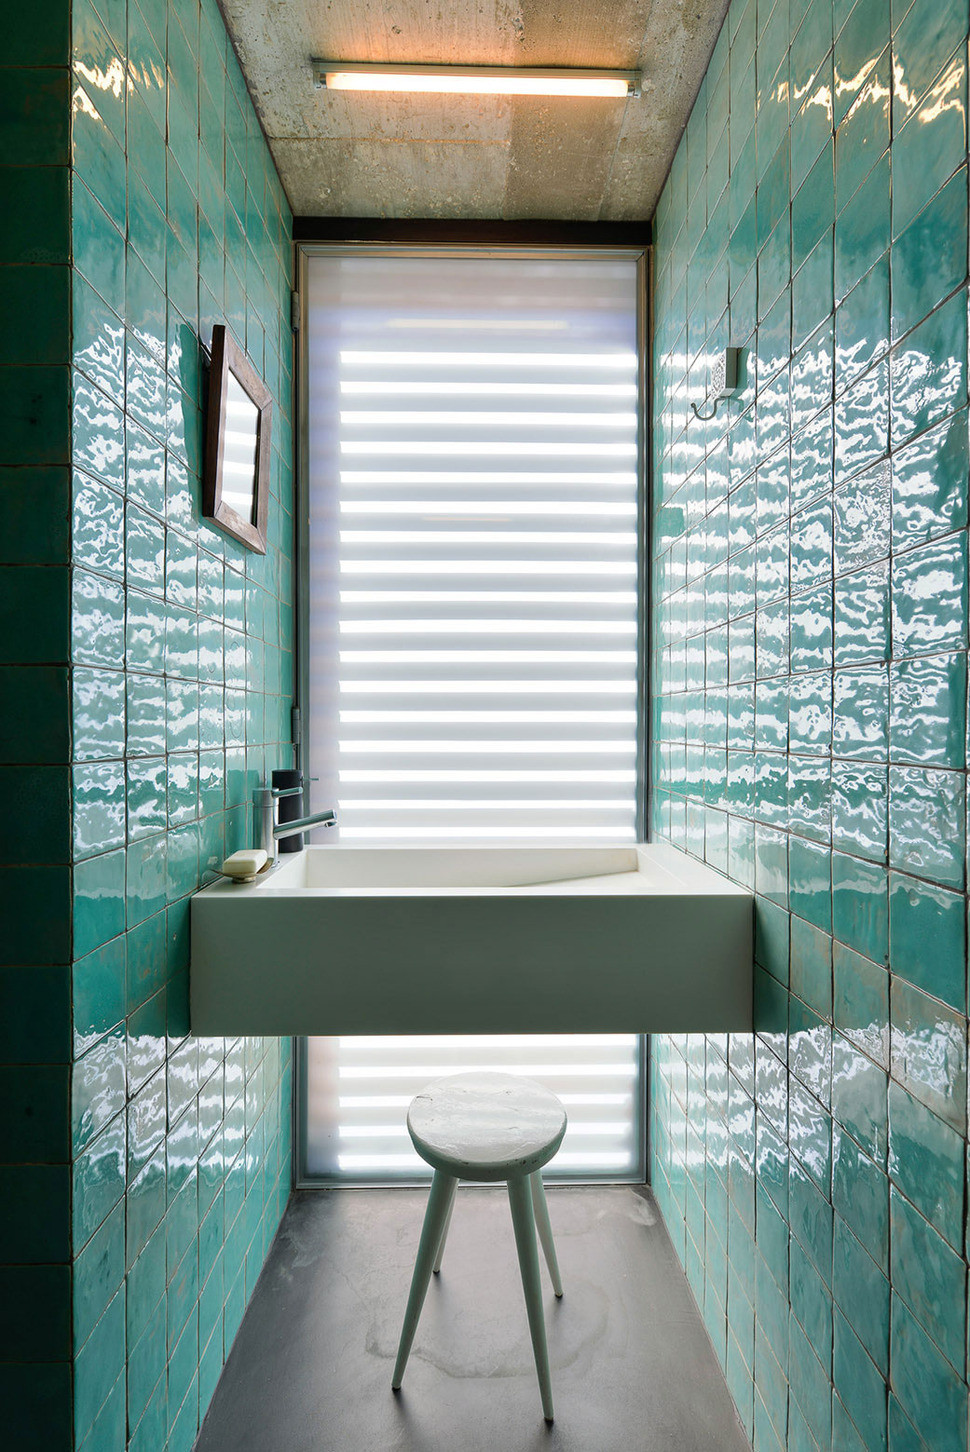 Bathroom Shower Tiles Ideas Best Of top 10 Tile Design Ideas for A Modern Bathroom for 2015